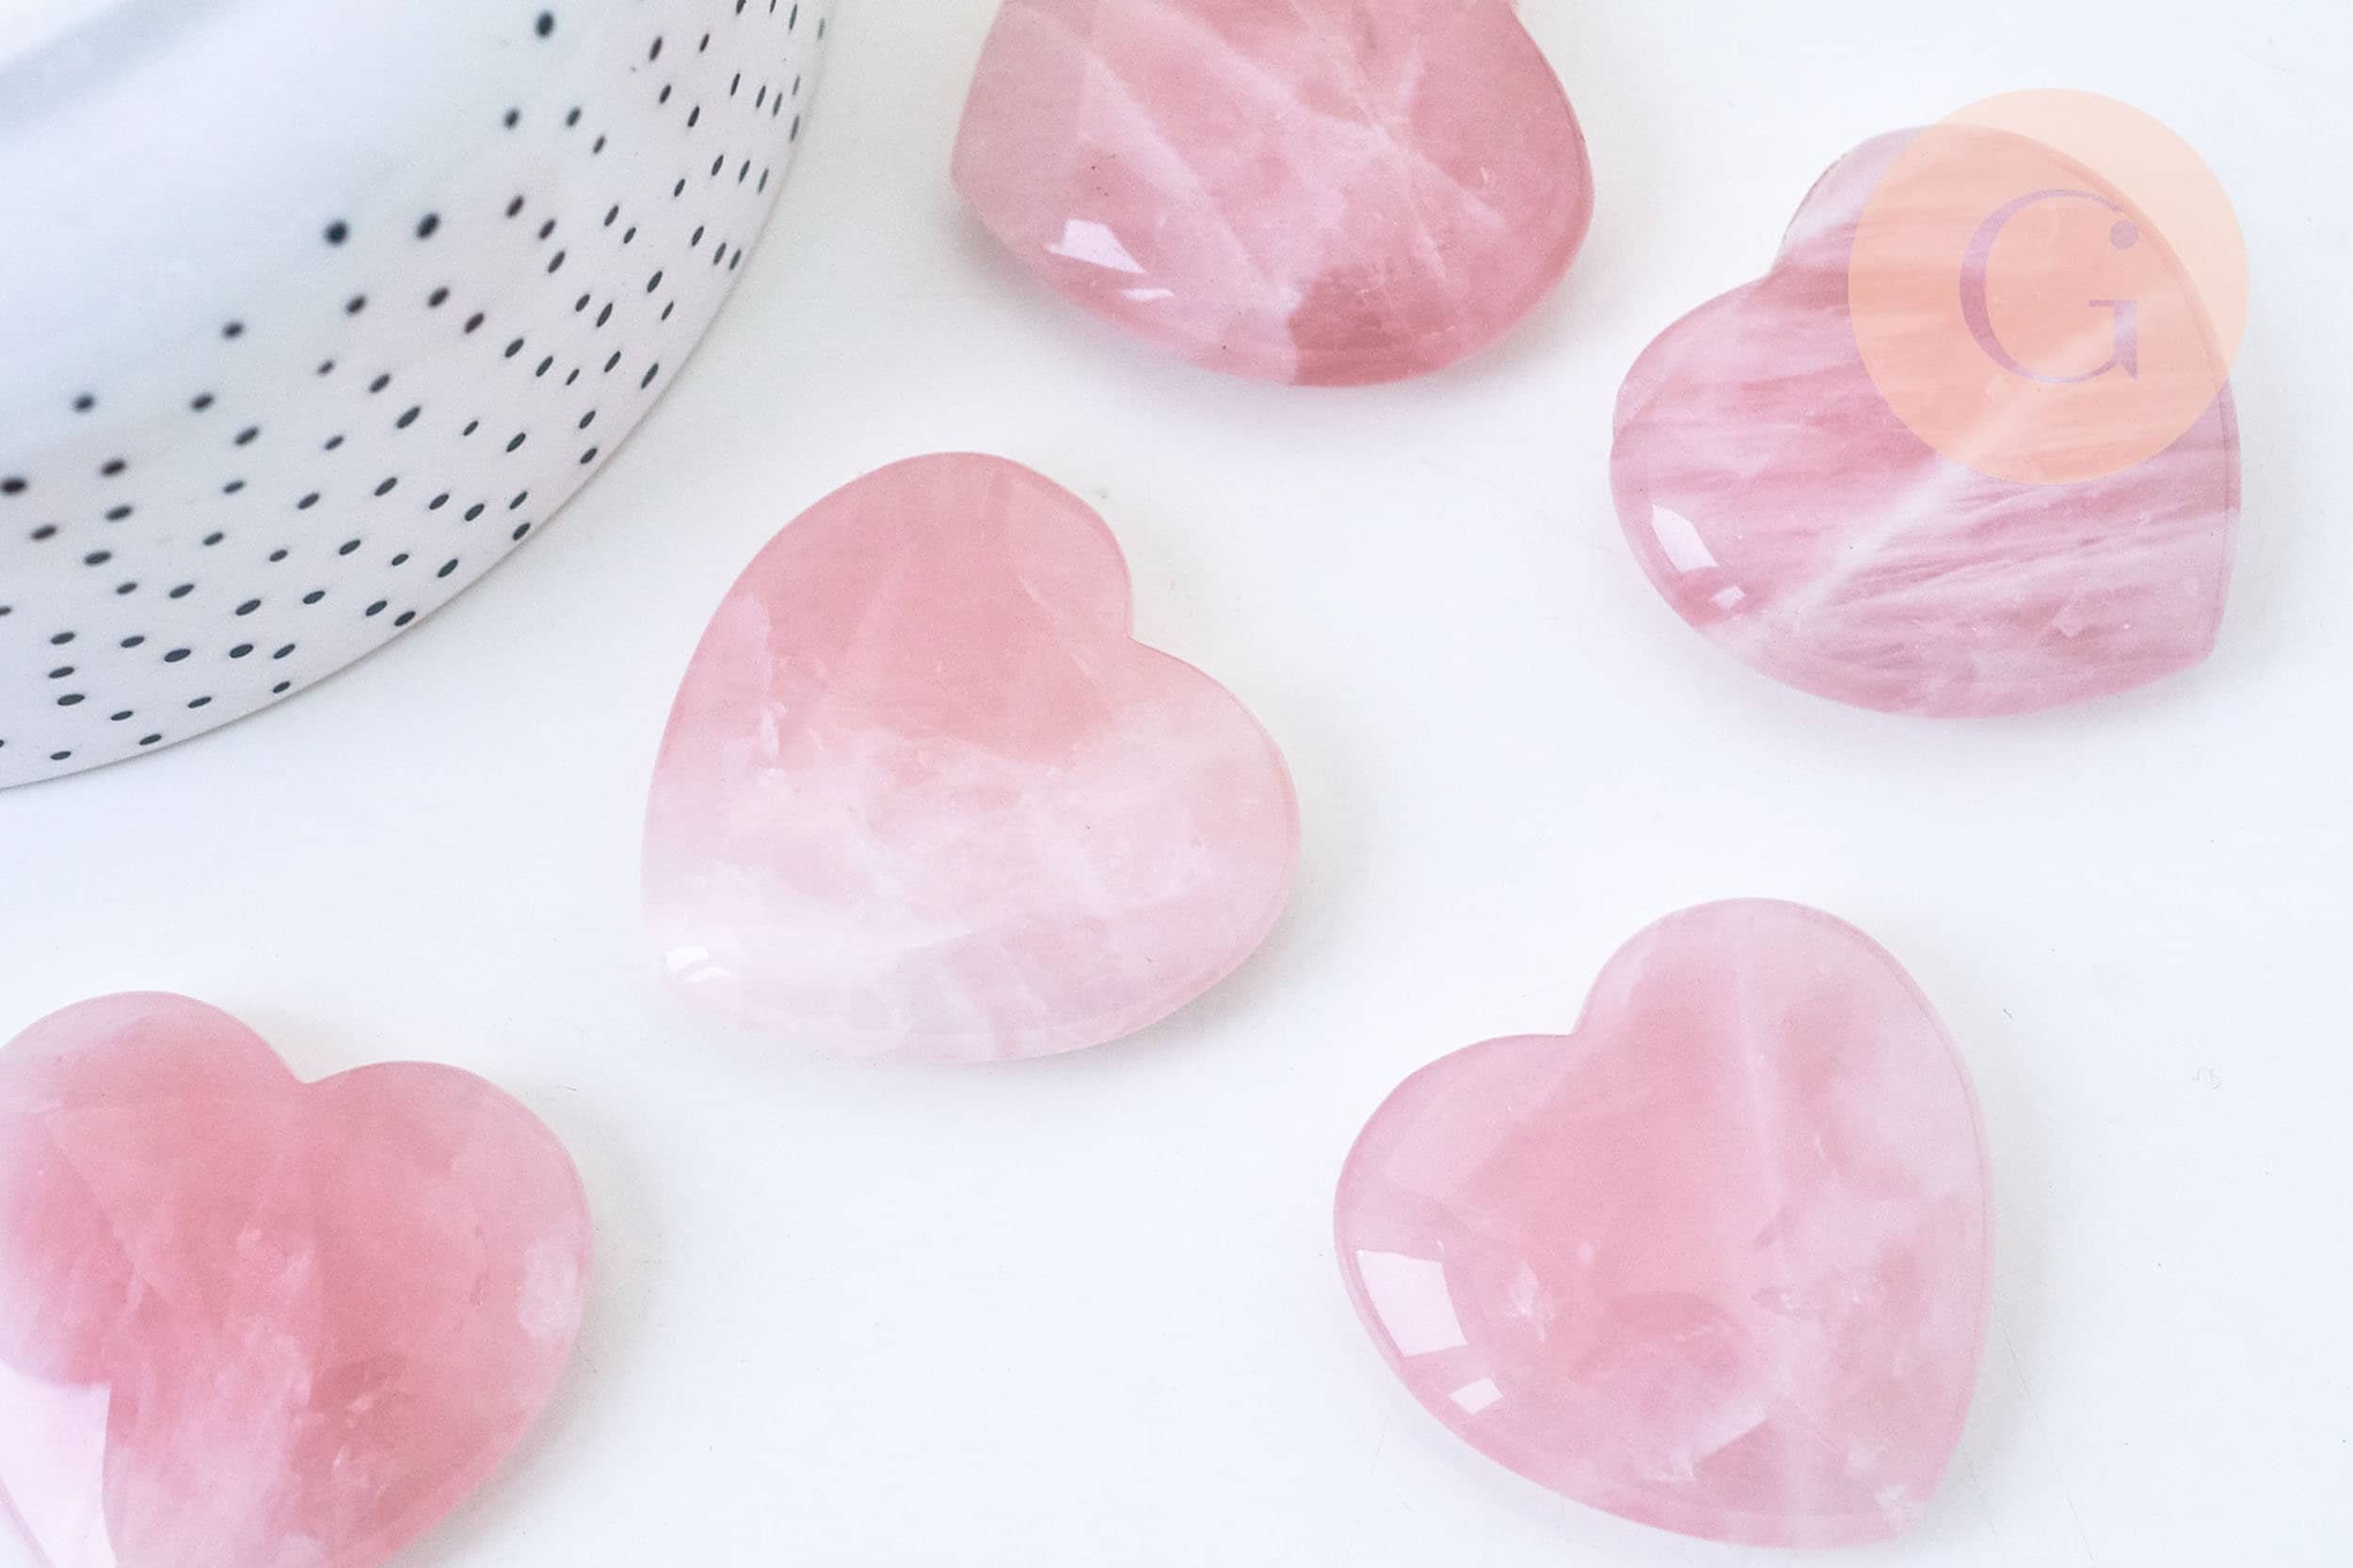 Coeur en pierre de Quartz Rose - Aromasud